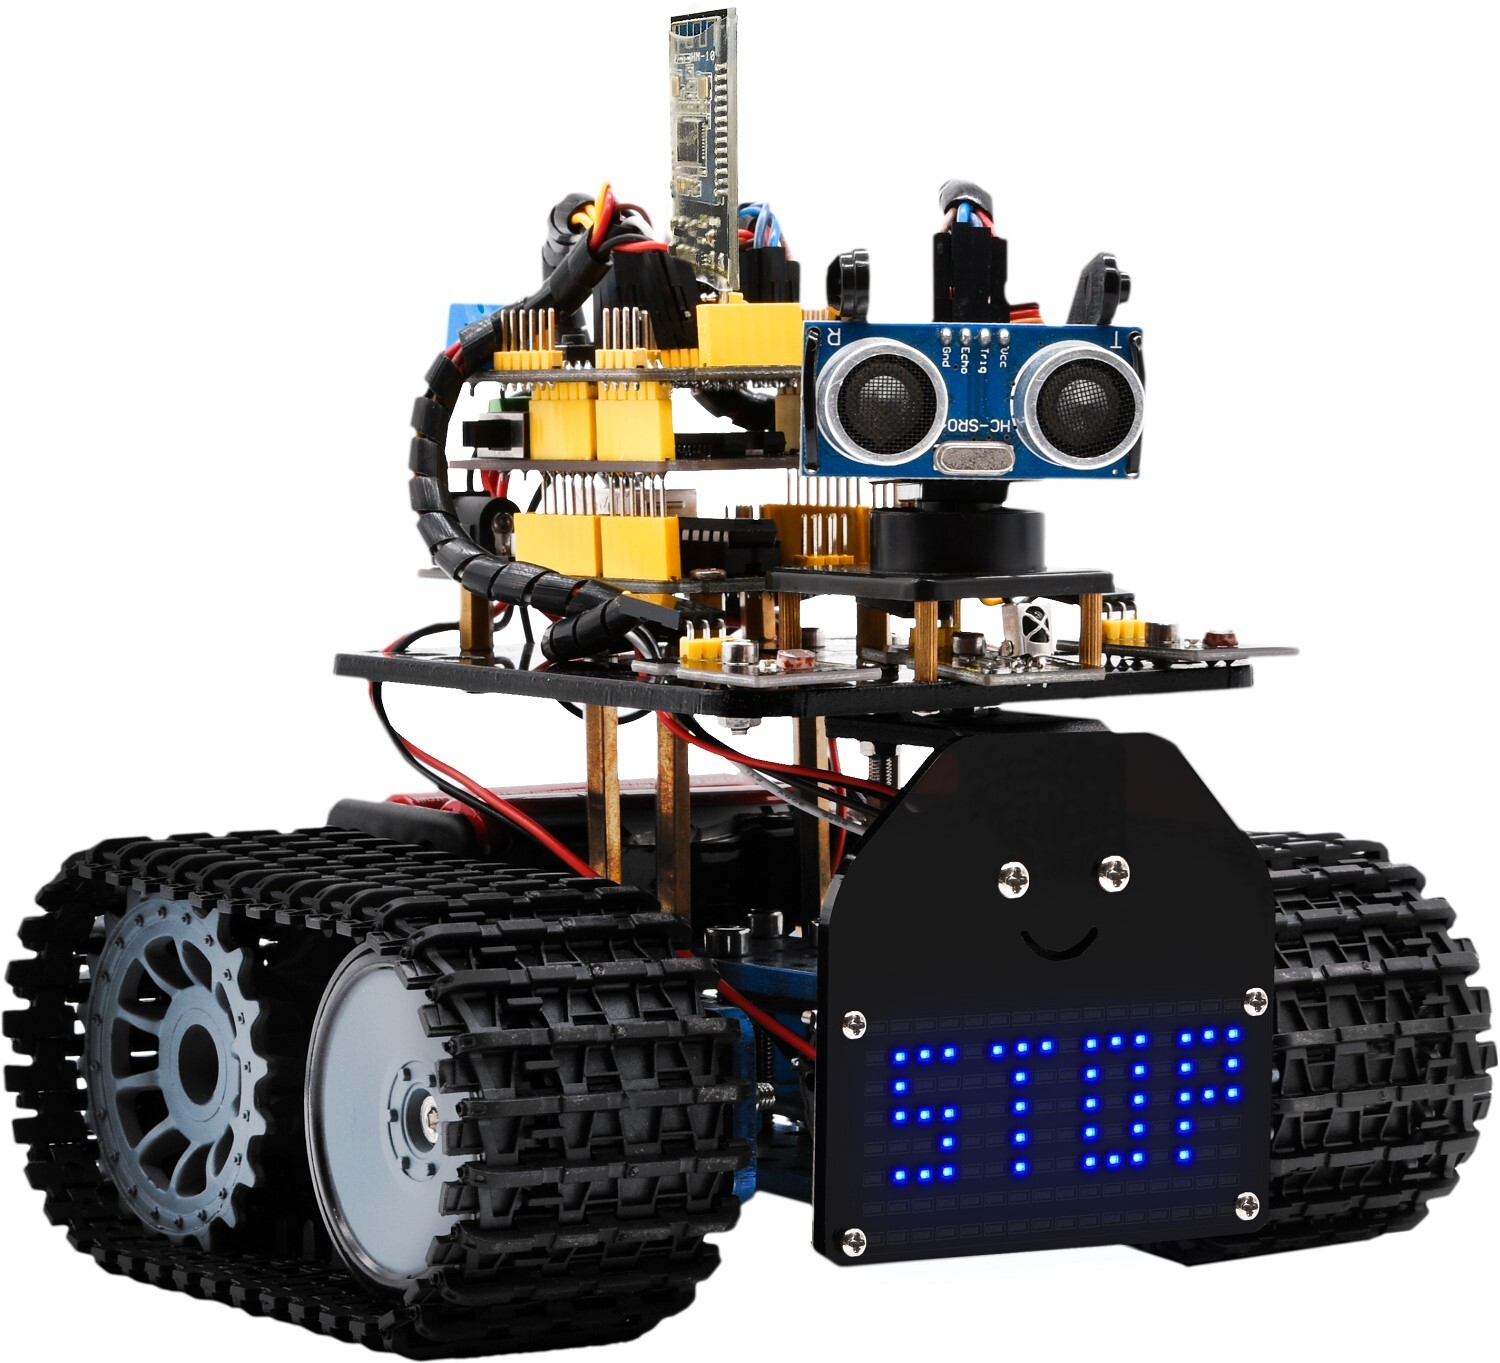 Mini Tank Bluetooth Arduino Project Robot Kit